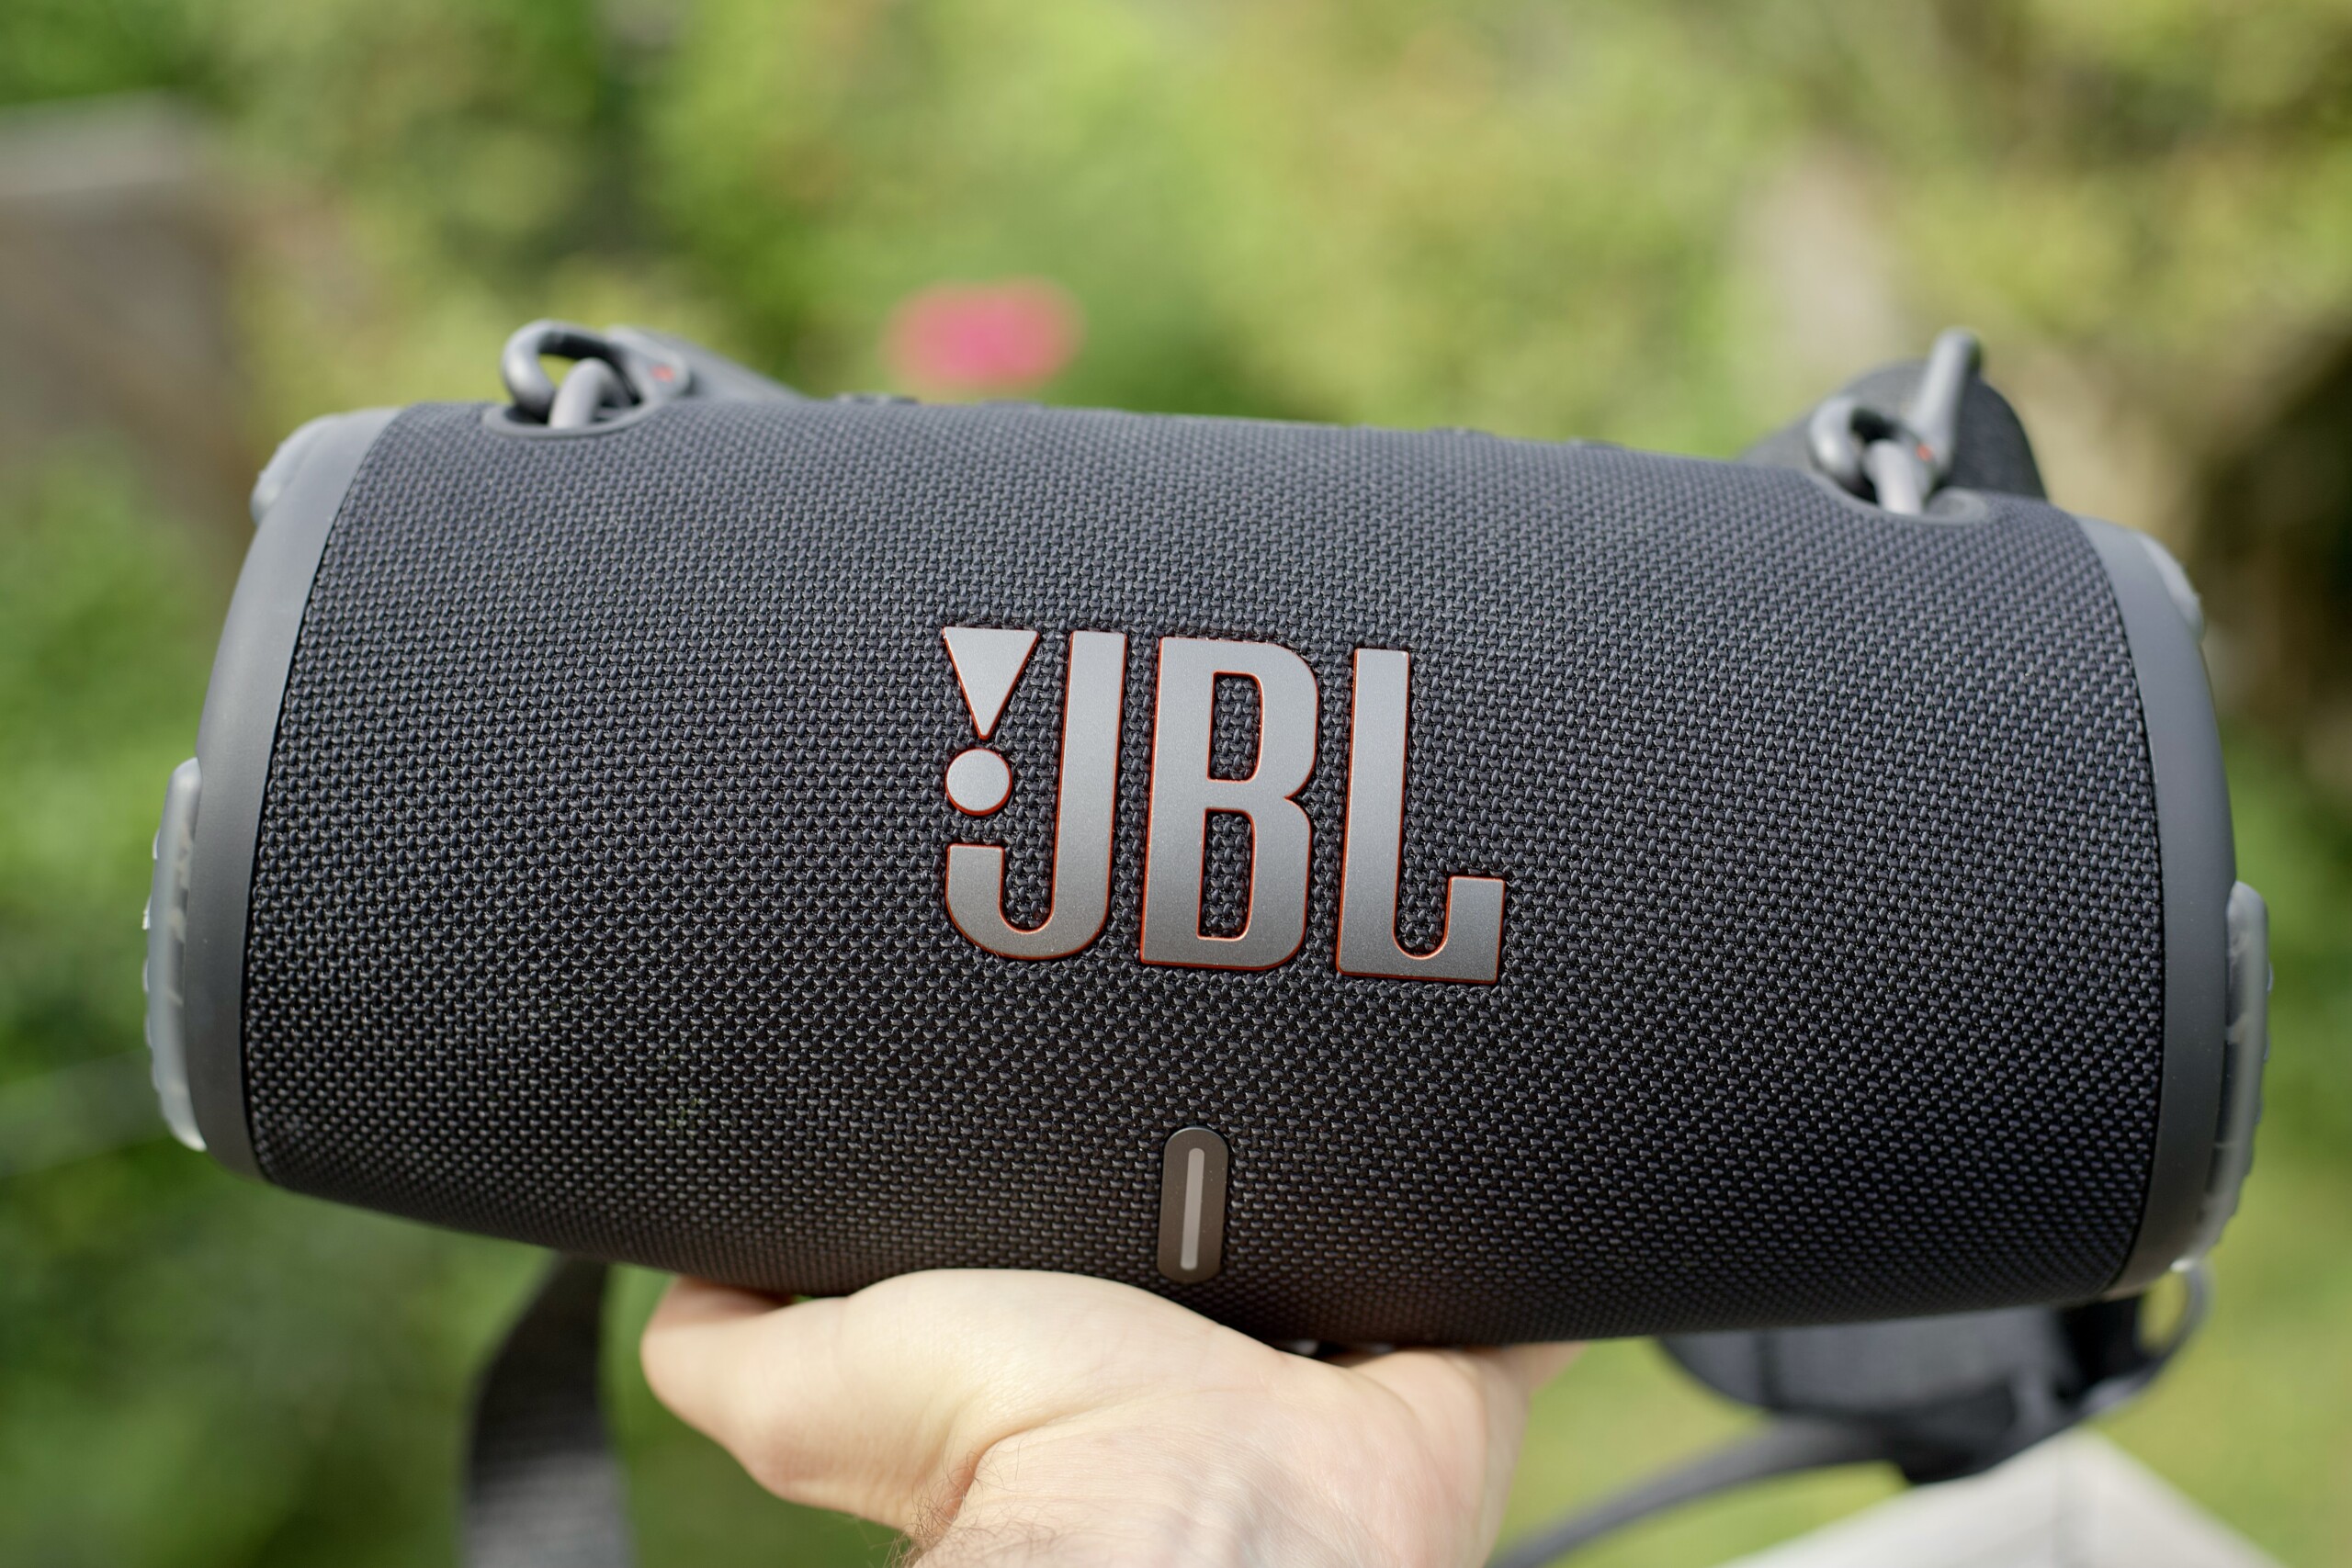 Achetez le JBL Xtreme 3, Enceinte portable